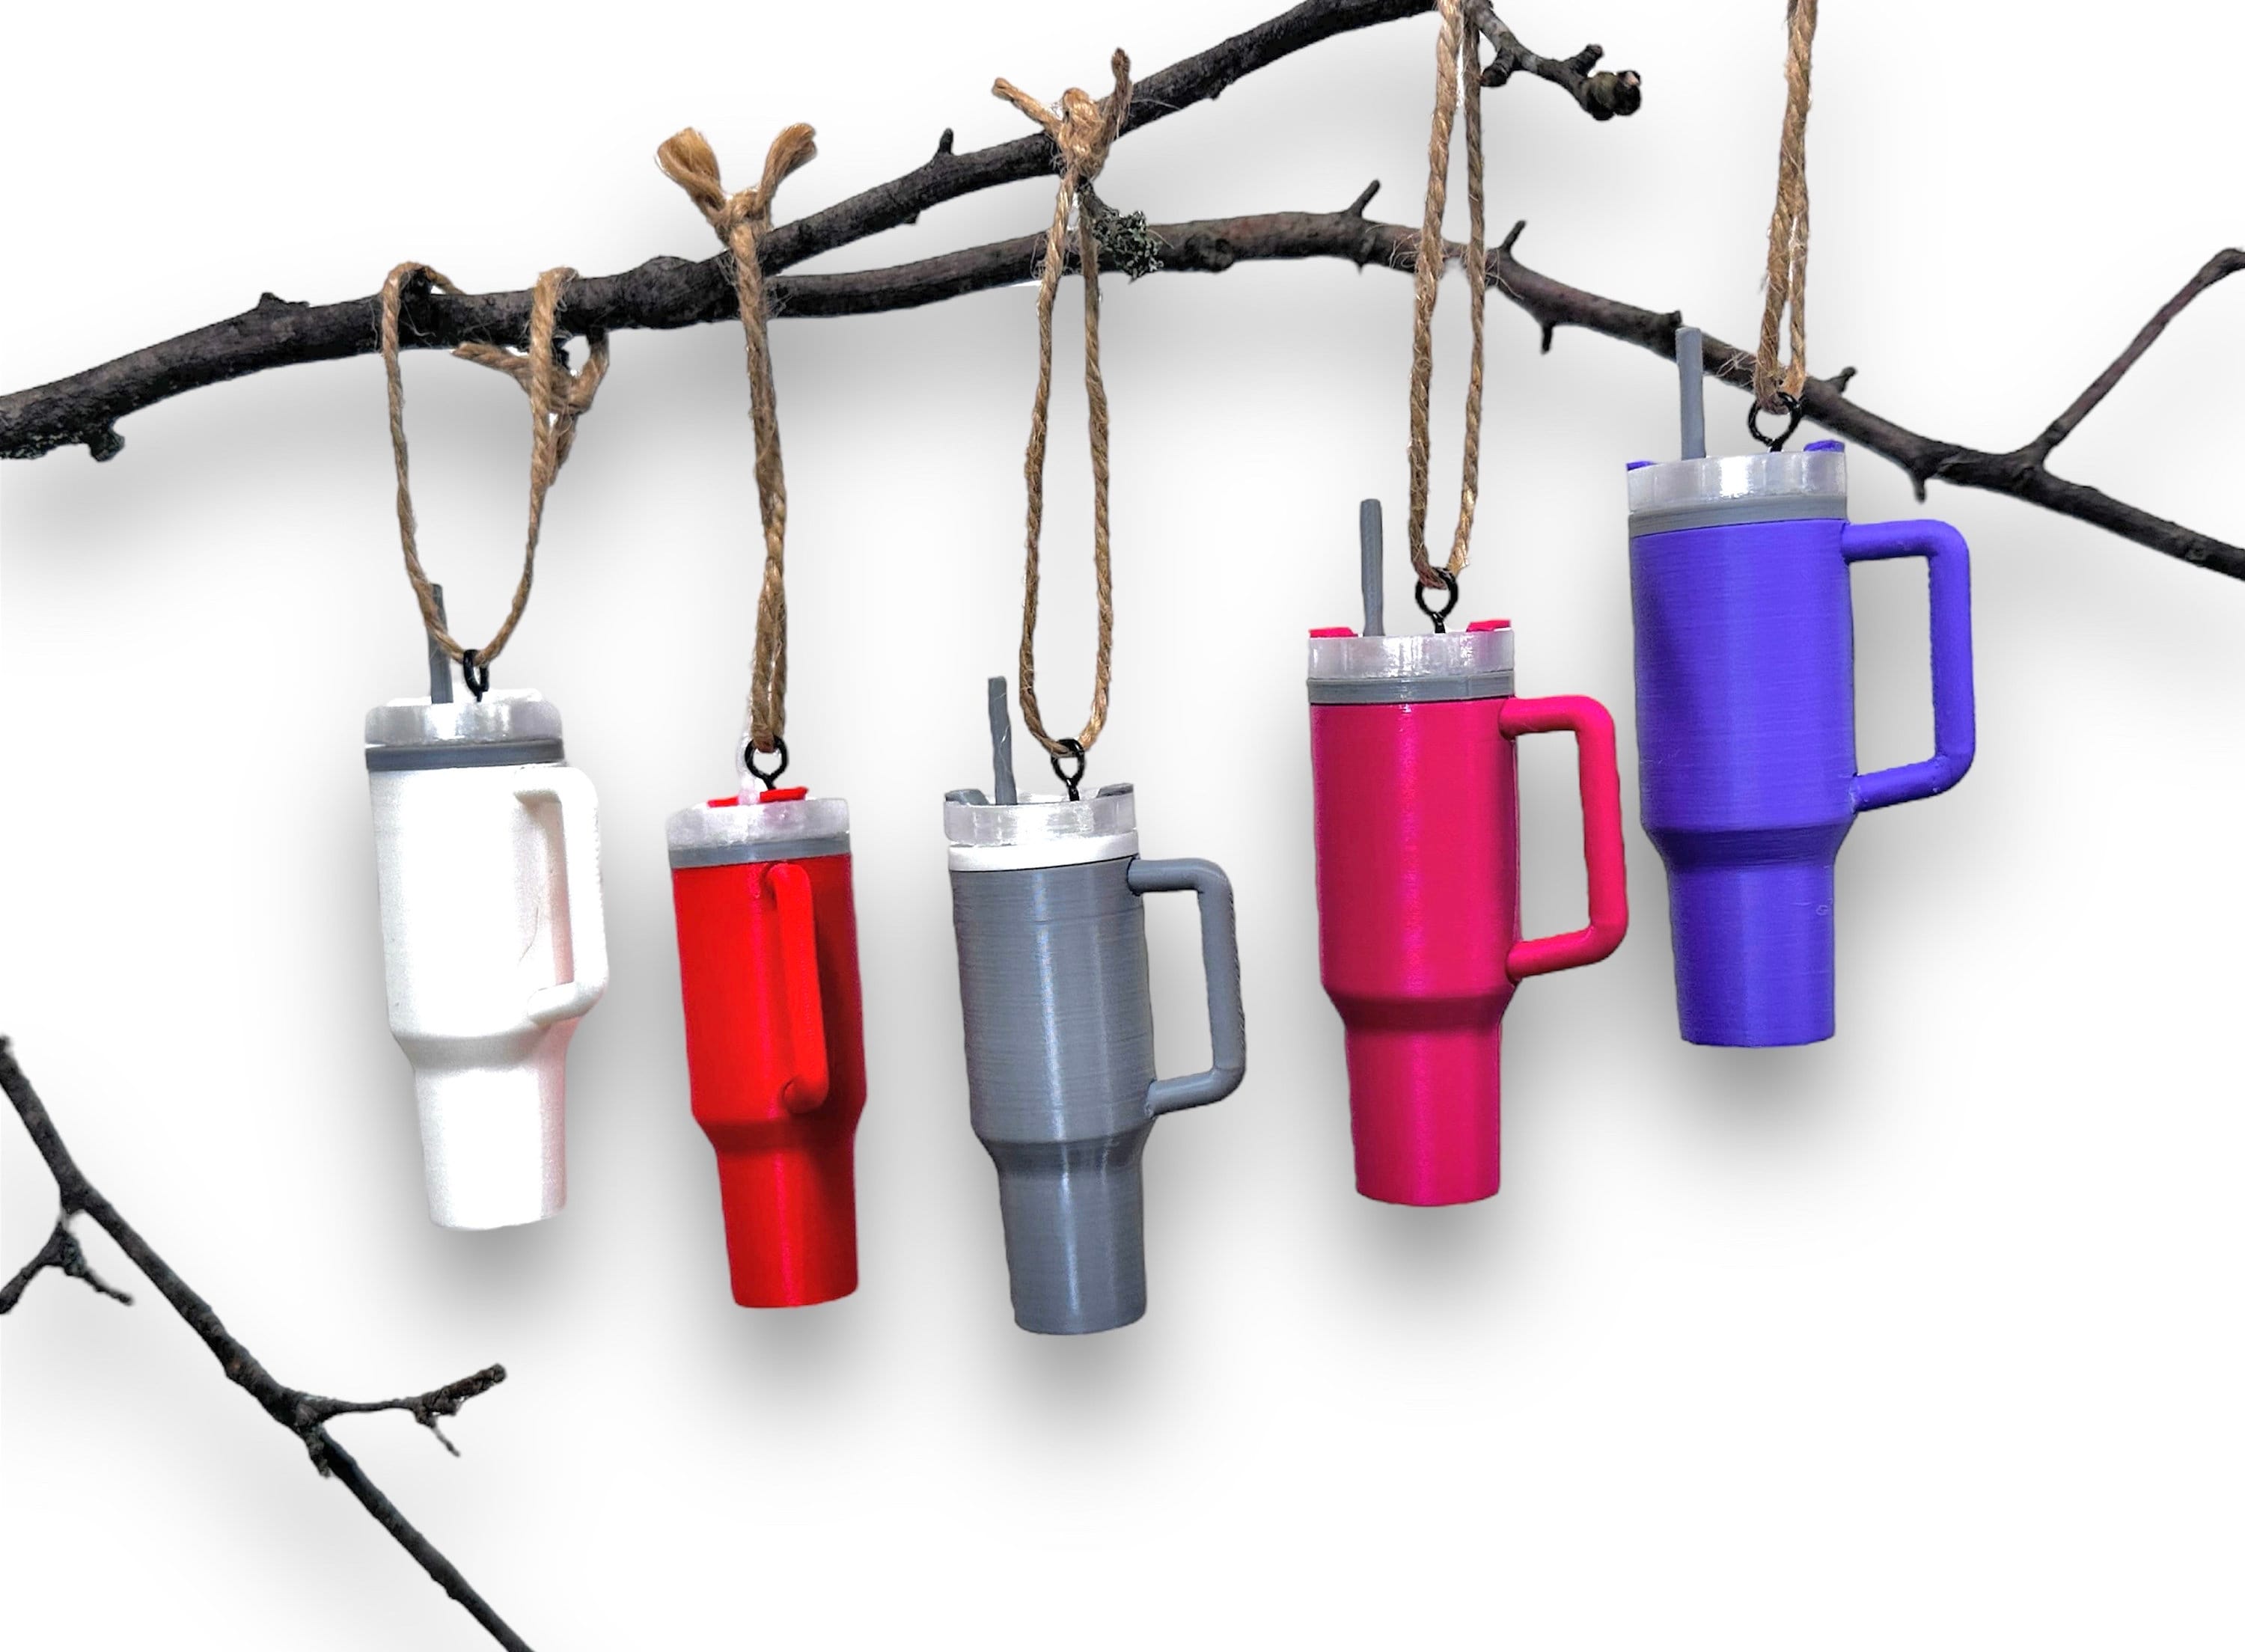 ways to find mini stanley cups for kids｜TikTok Search